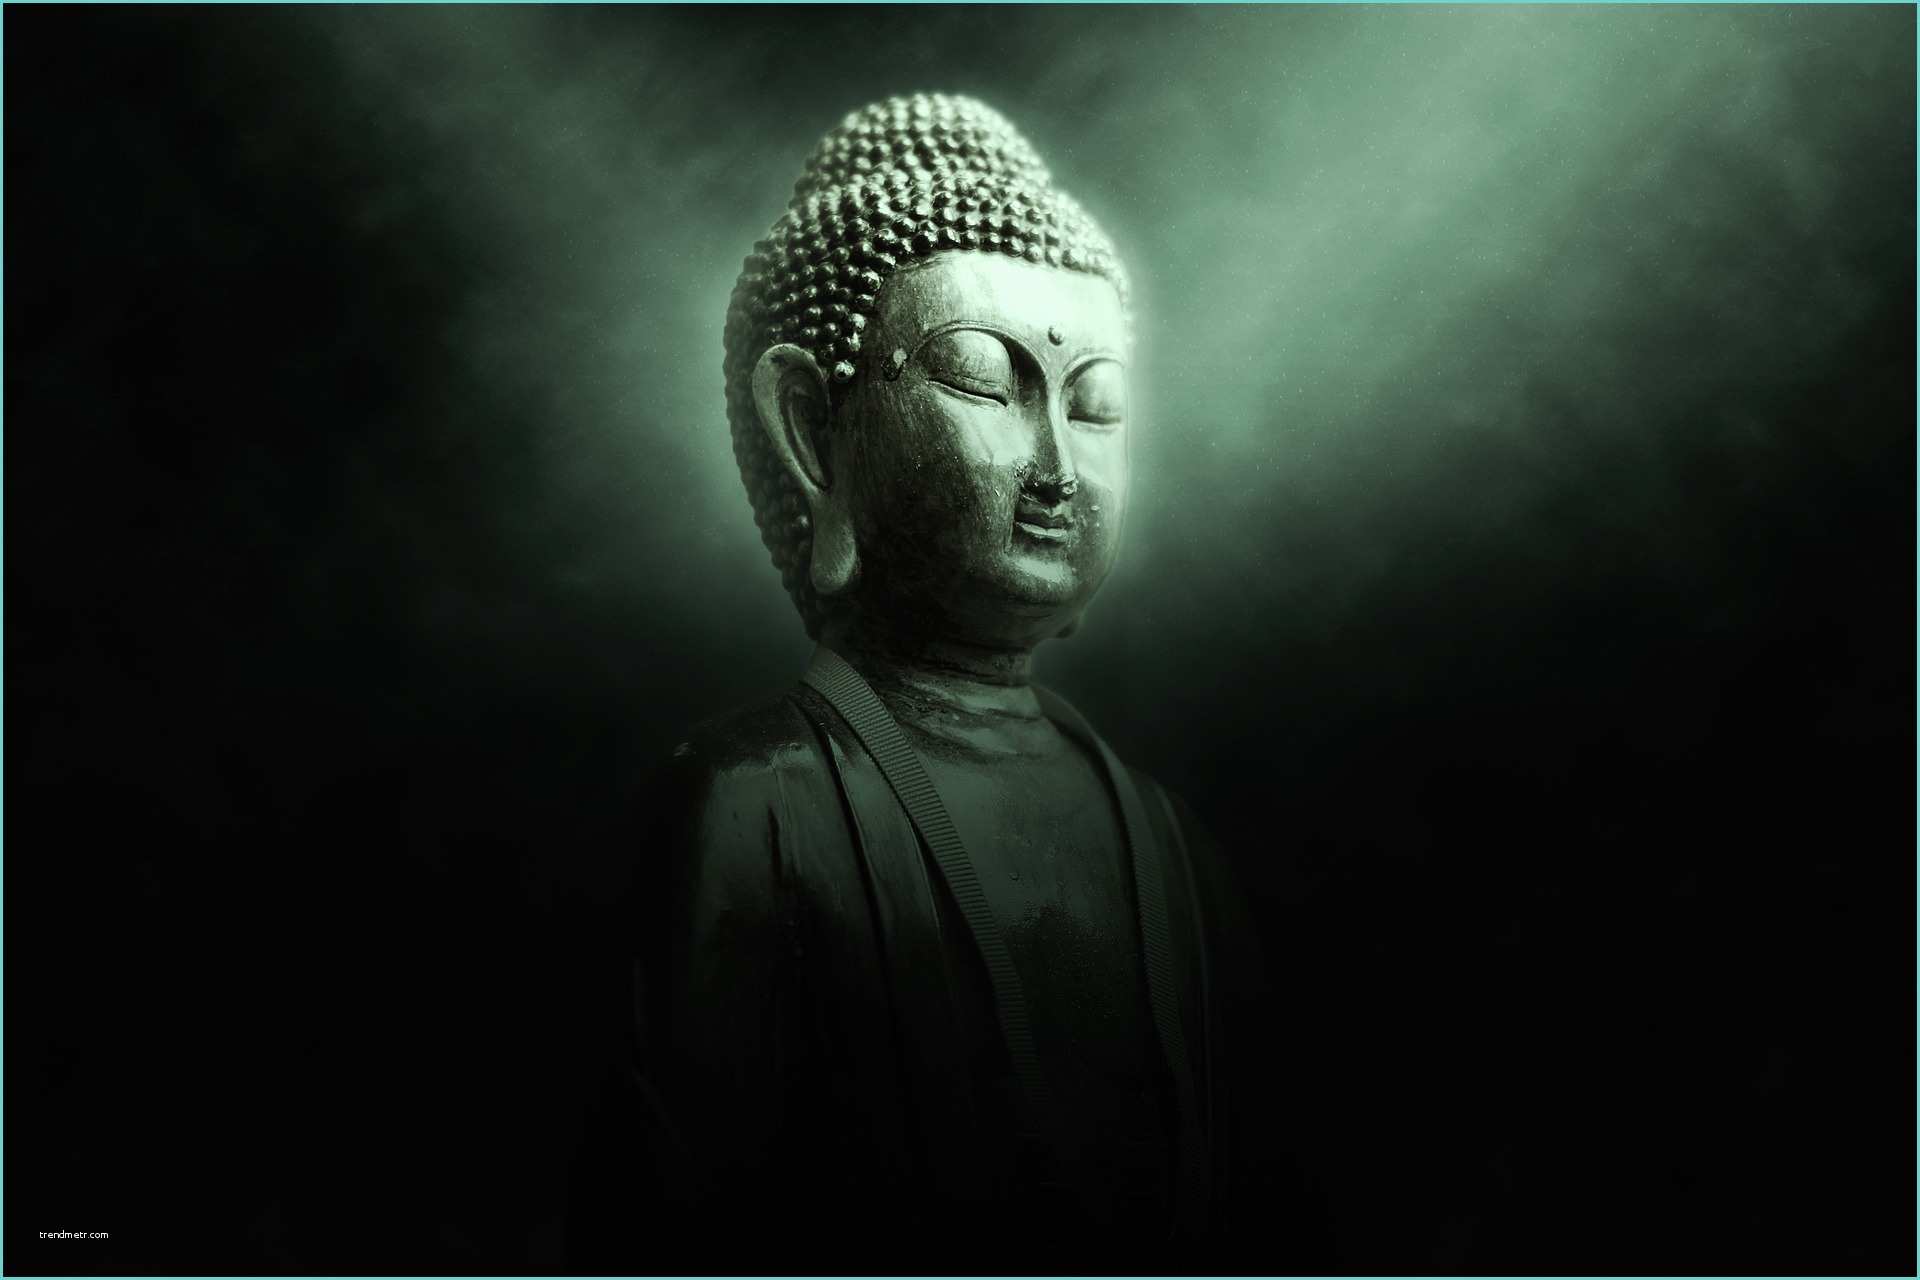 Image Zen Bouddha 9 Shakyamuni Buddha S Enlightenment What Did He Realize